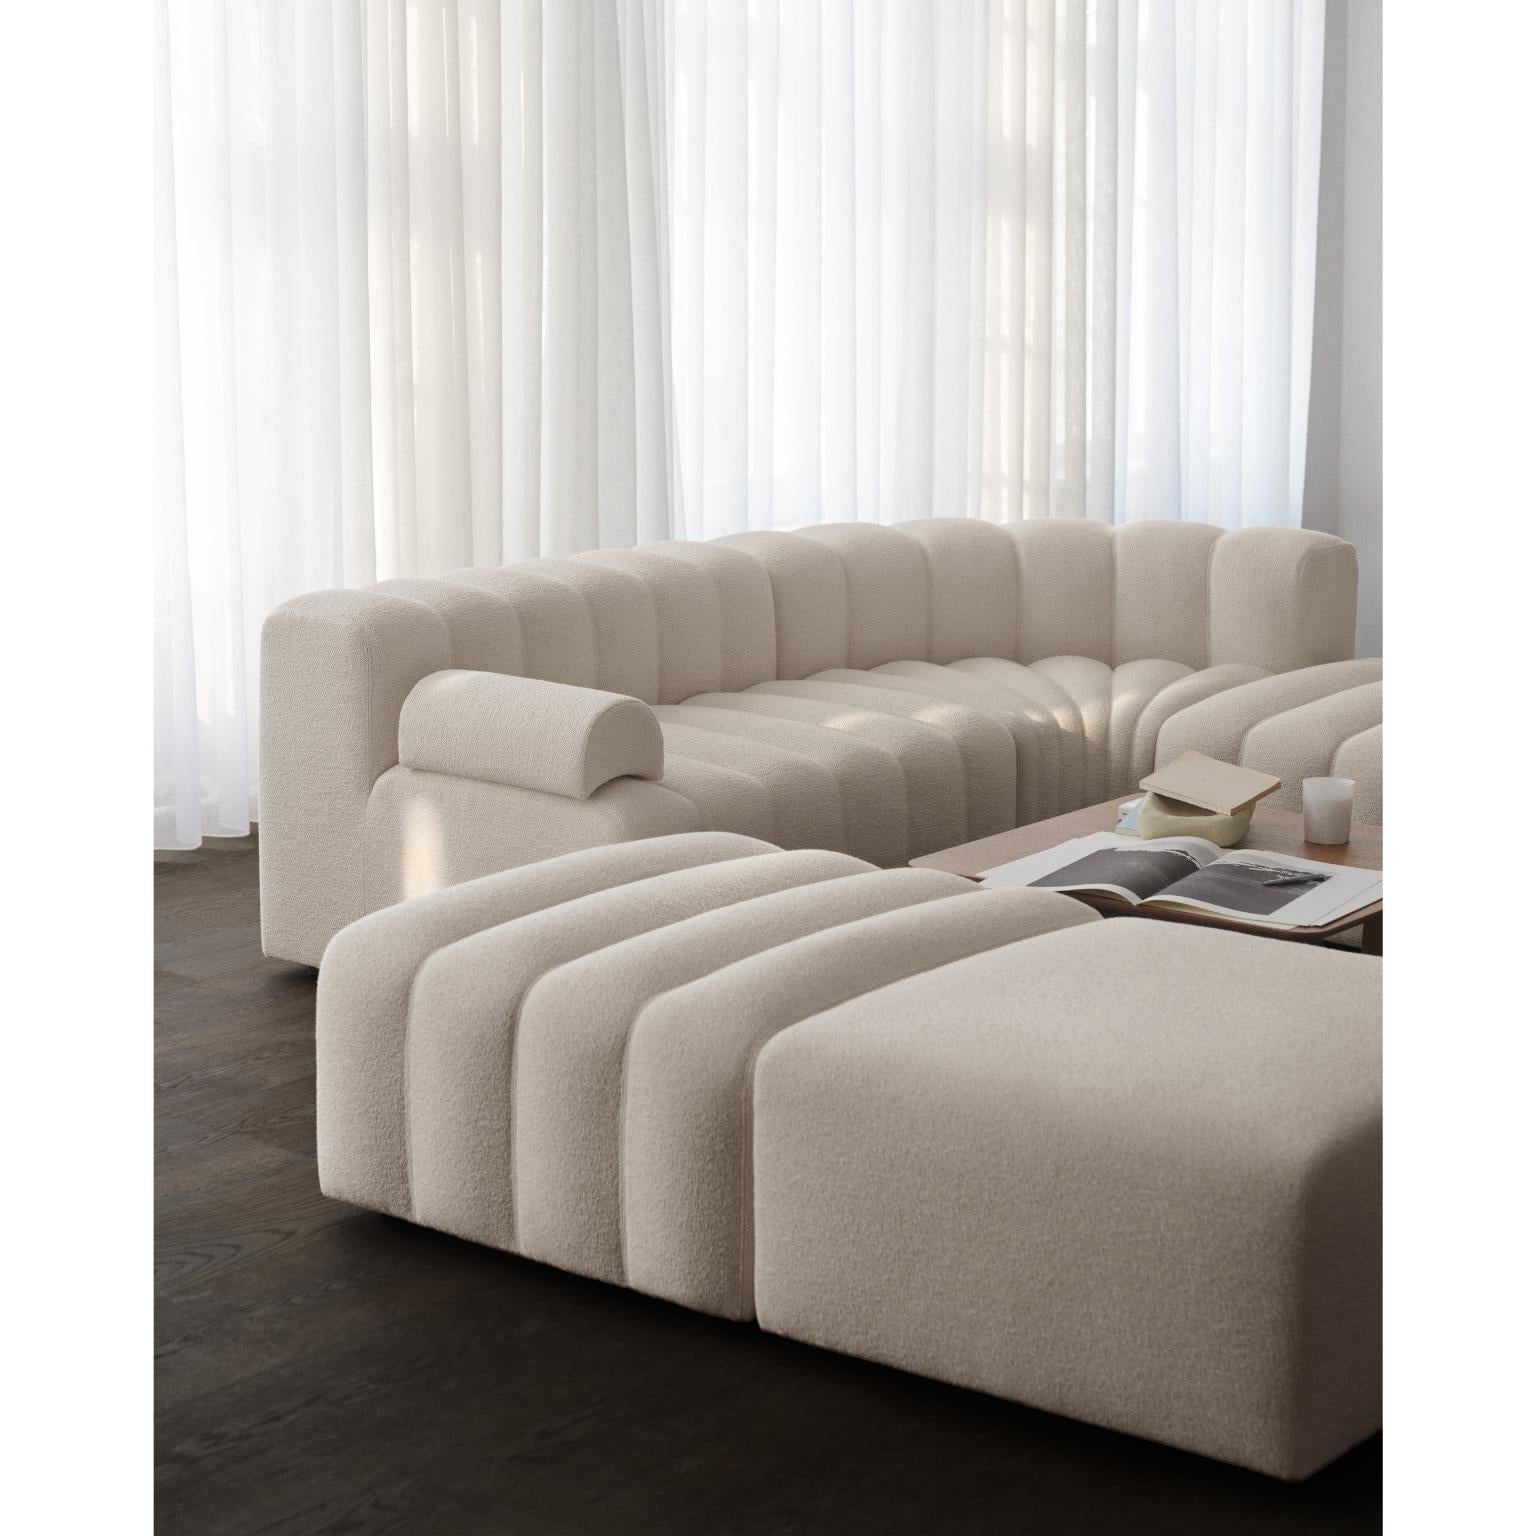 Other Studio Lounge Large Left Modular Sofa With Short Armrest by NORR11 For Sale